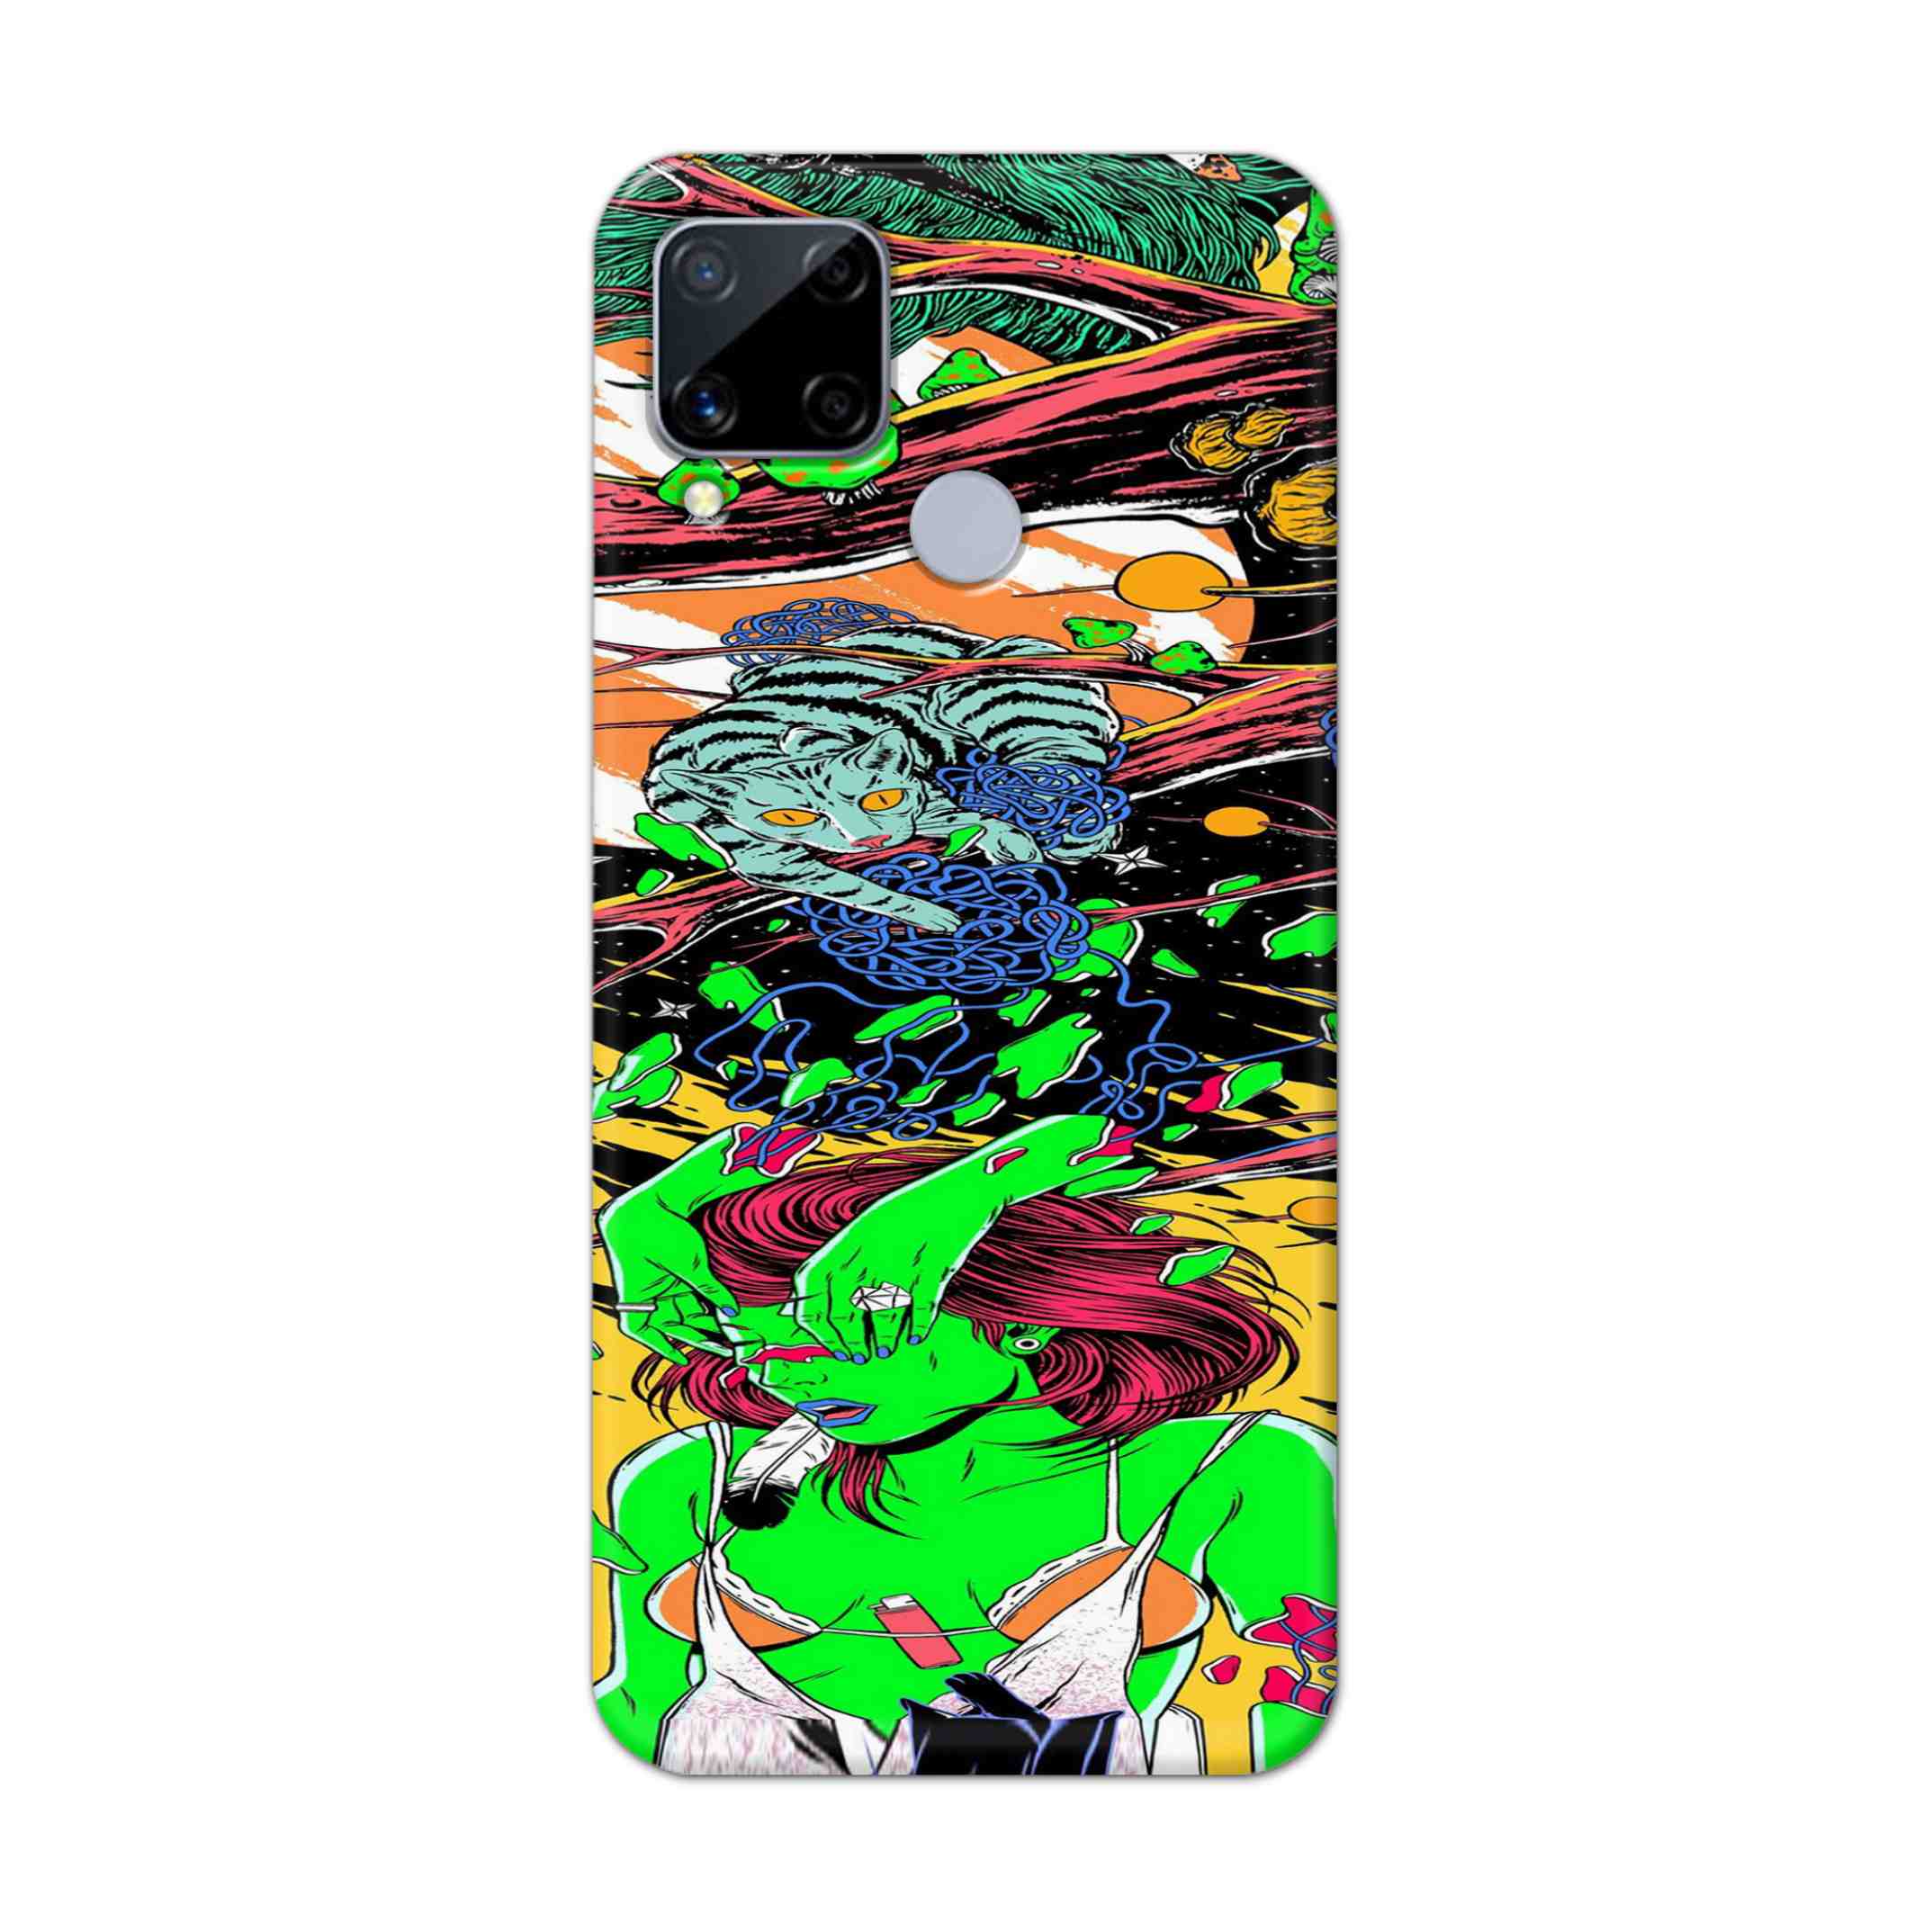 Buy Green Girl Art Hard Back Mobile Phone Case Cover For Realme C15 Online